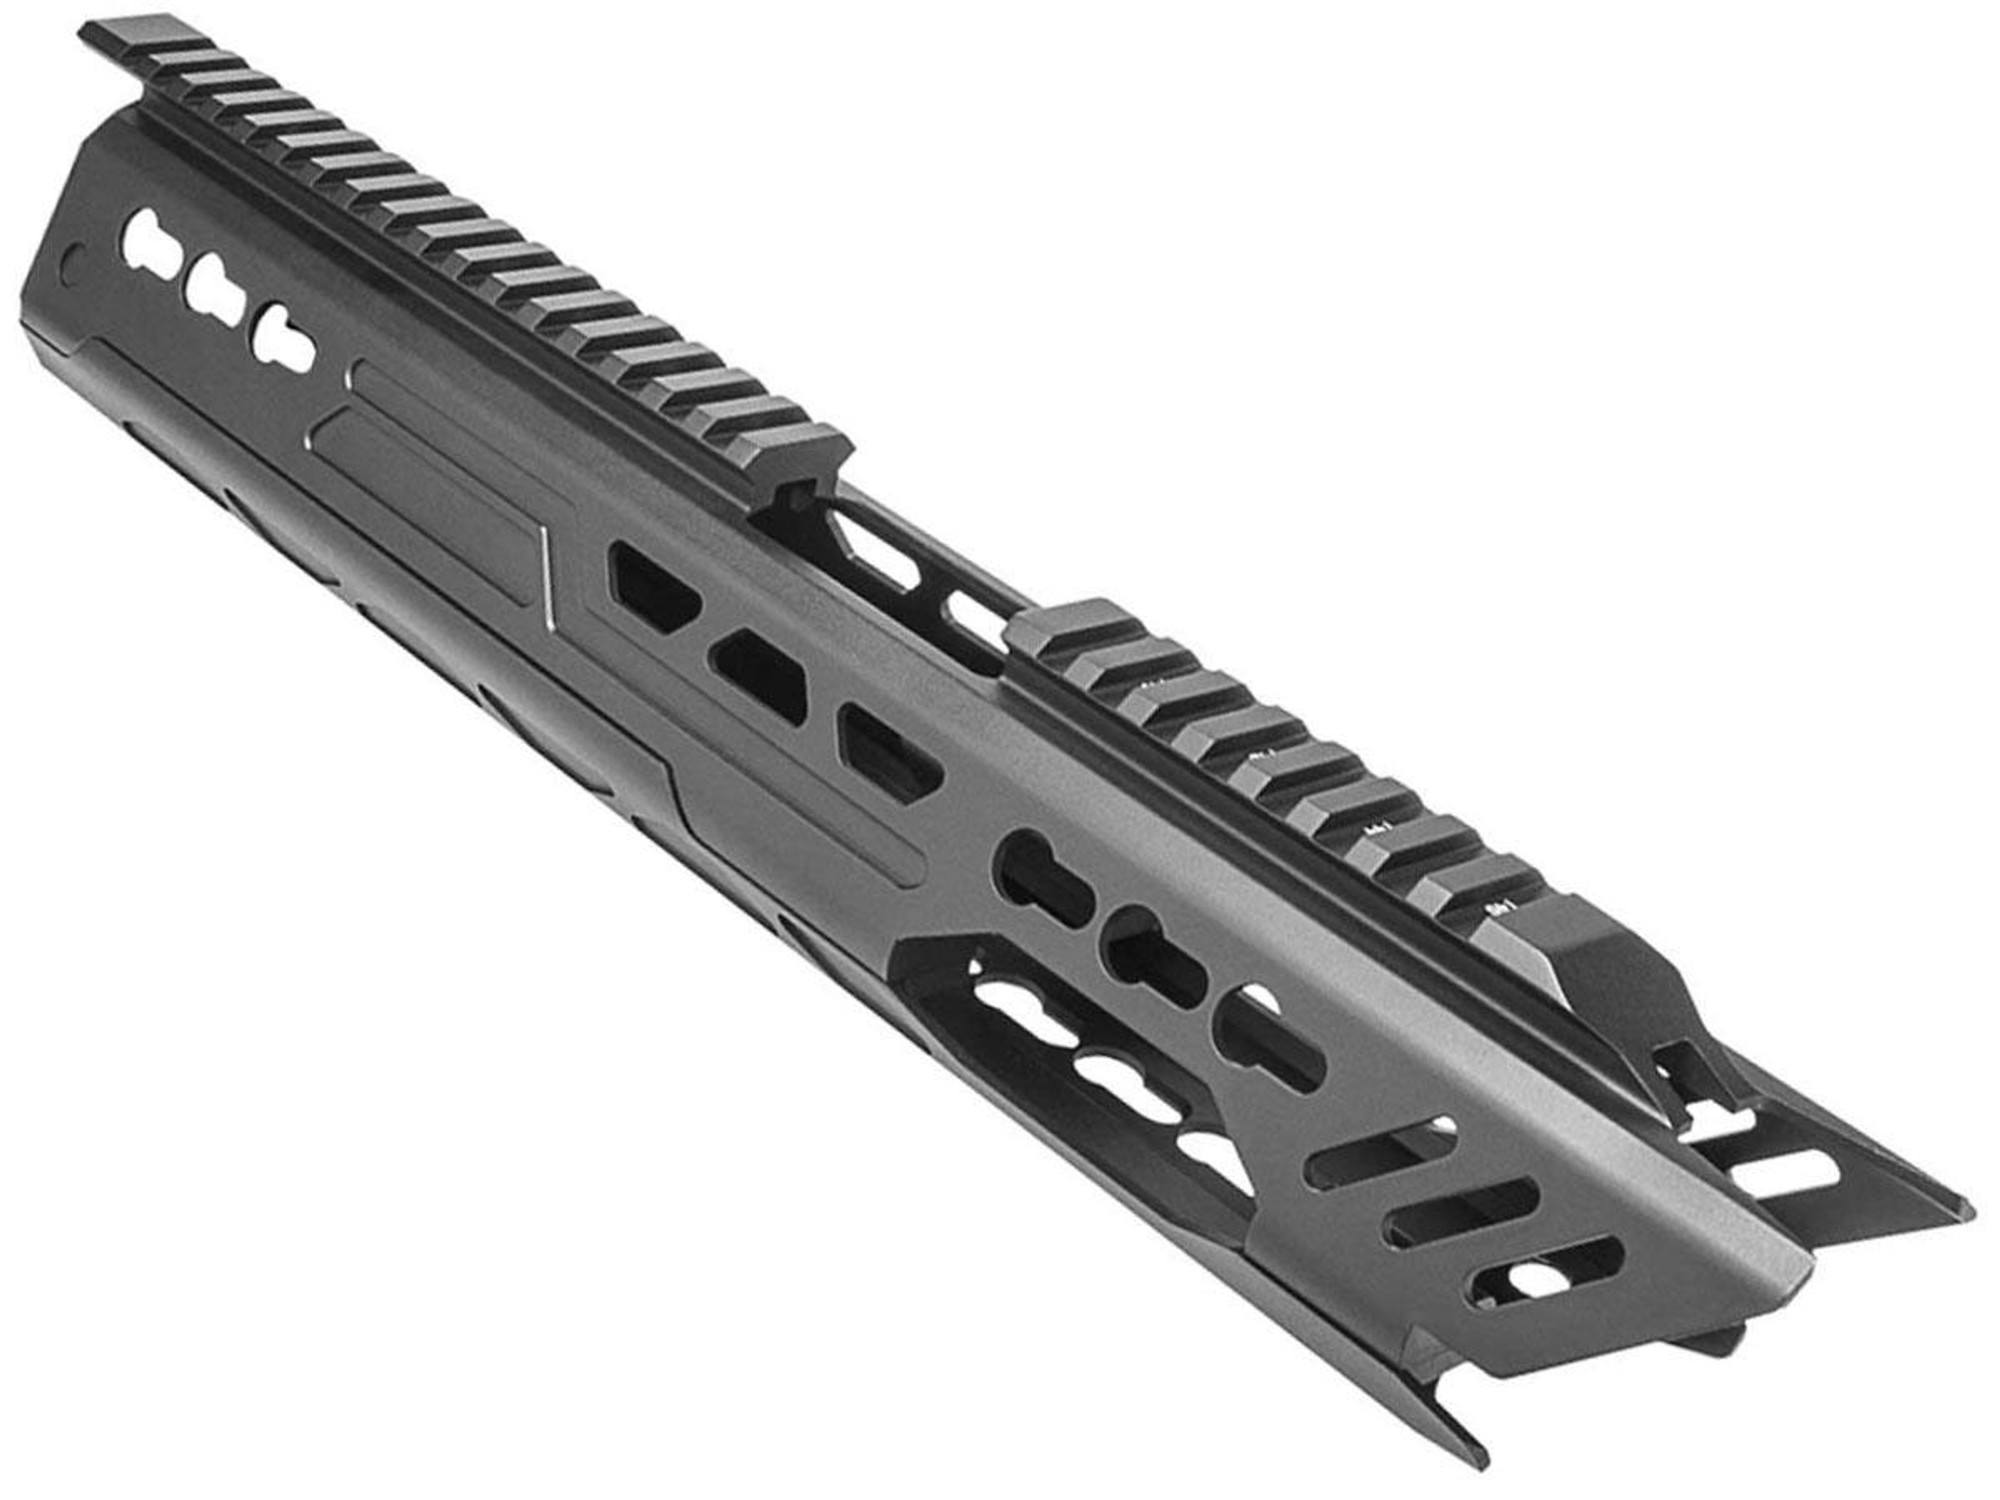 NcSTAR VISM BlastAR Extended Carbine Handguard for M4 / AR15 Rifles